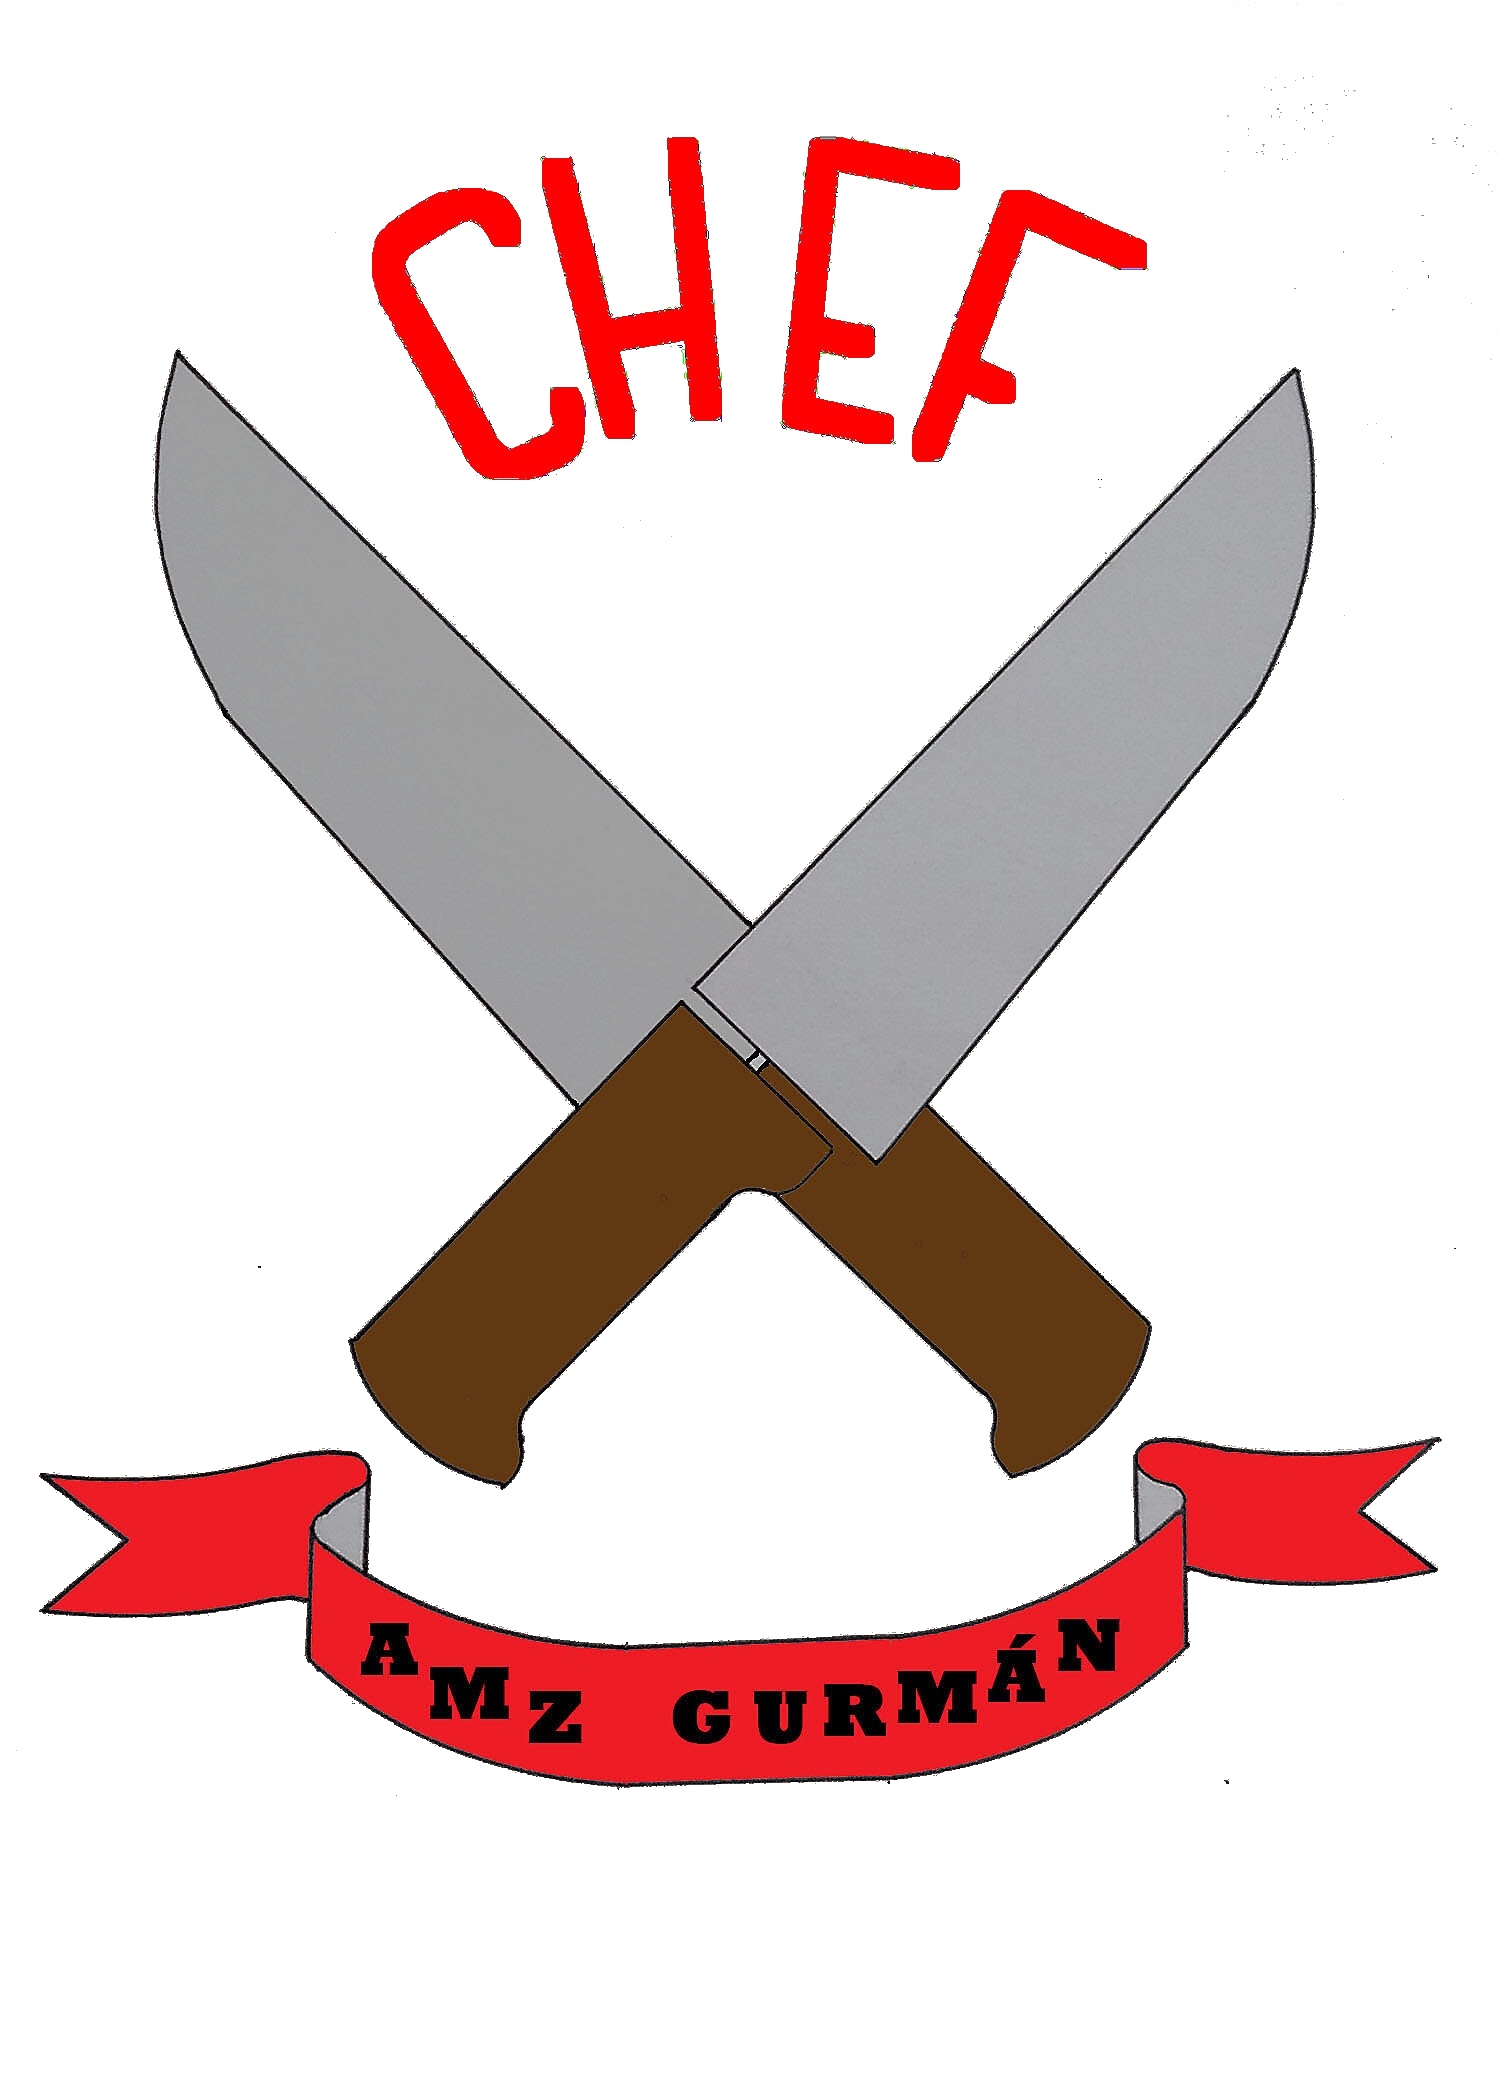 kuchar logo